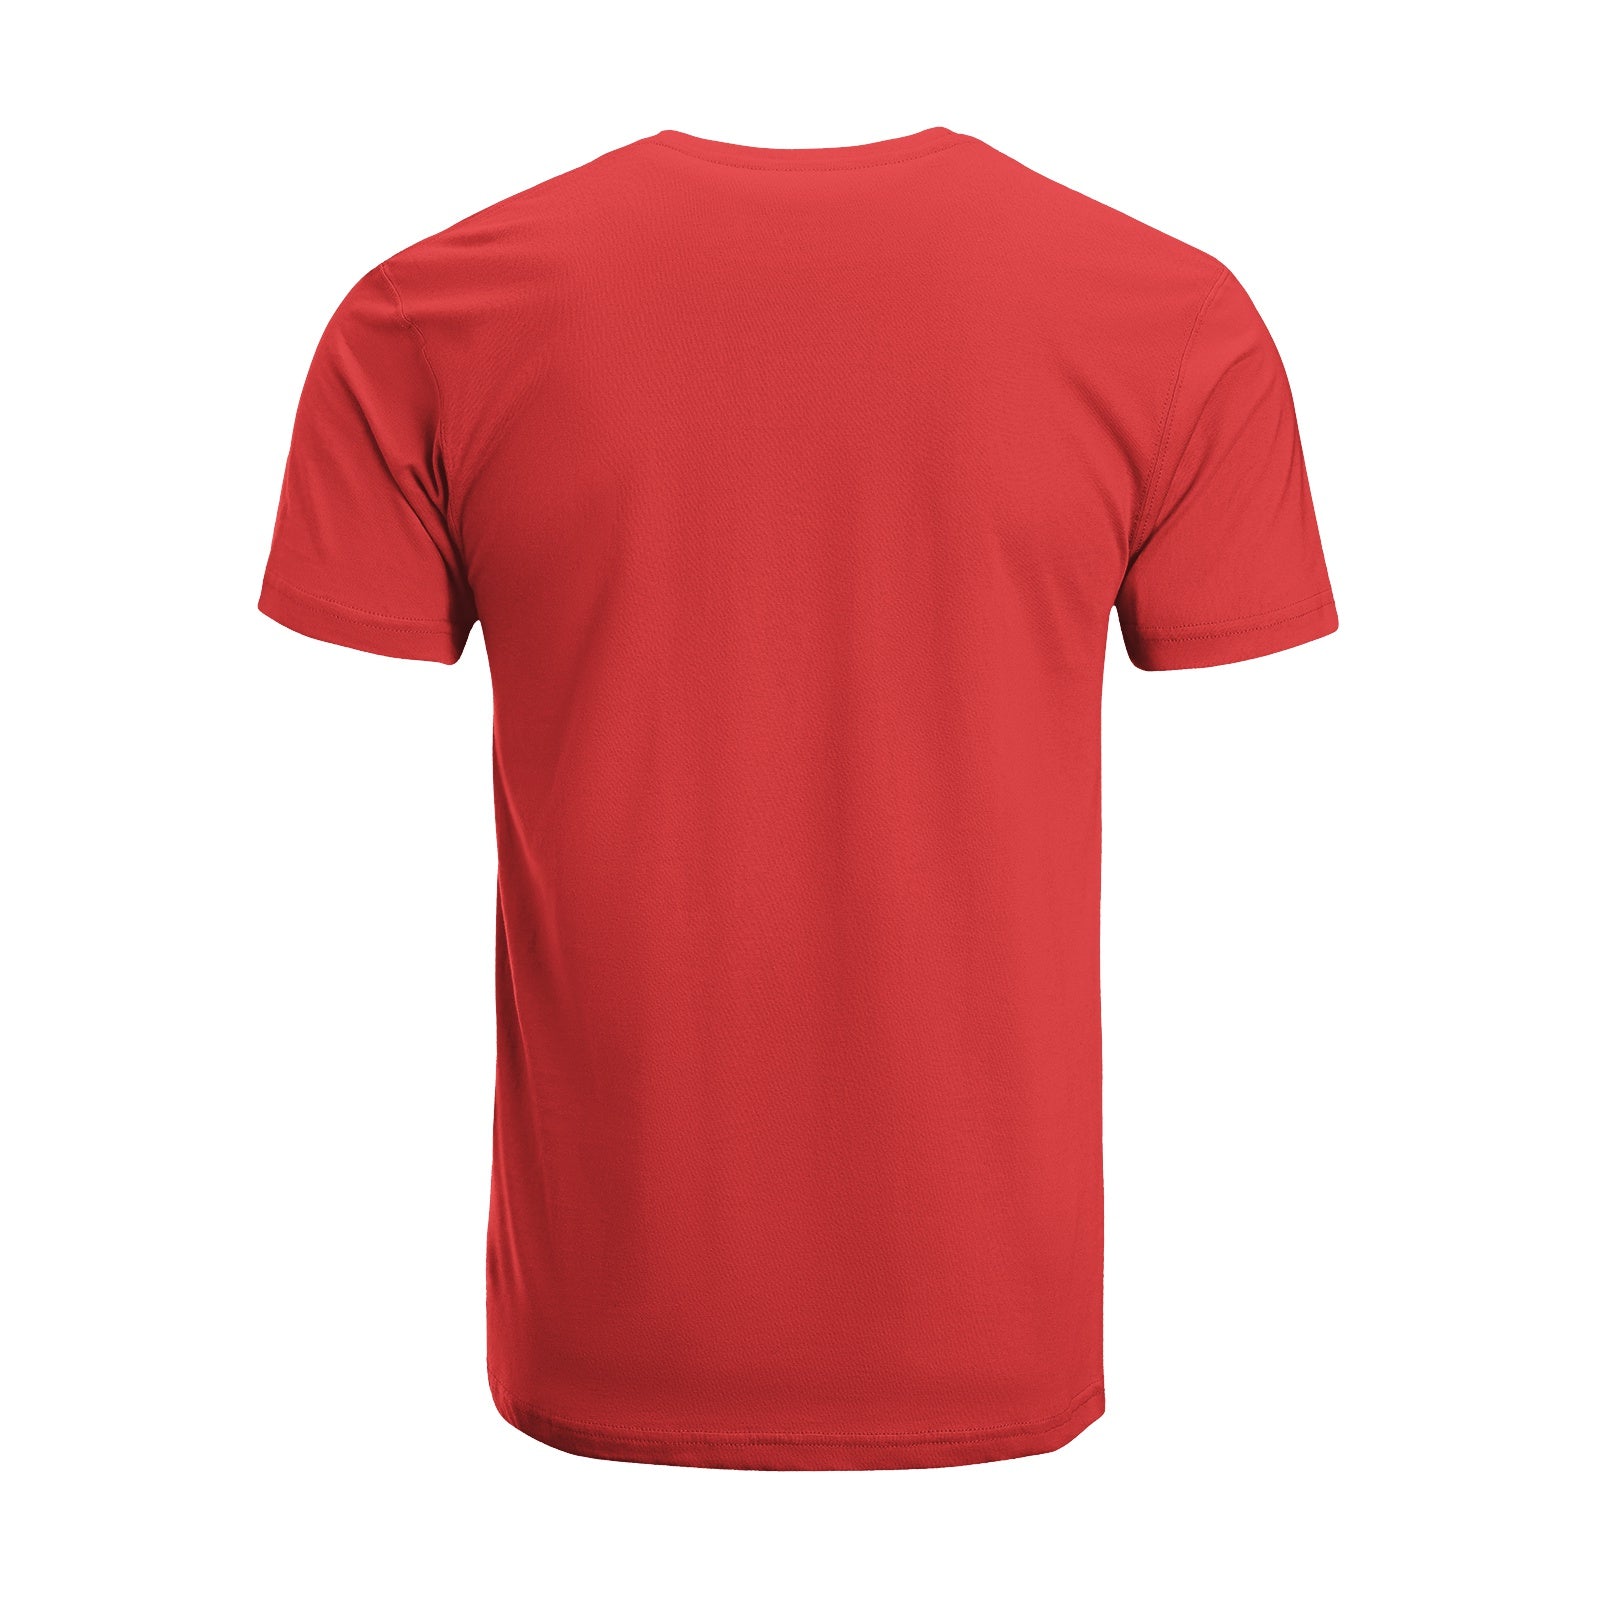 Unisex Short Sleeve Crew Neck Cotton Jersey T-Shirt Gym No. 25 - Tara-Outfits.com